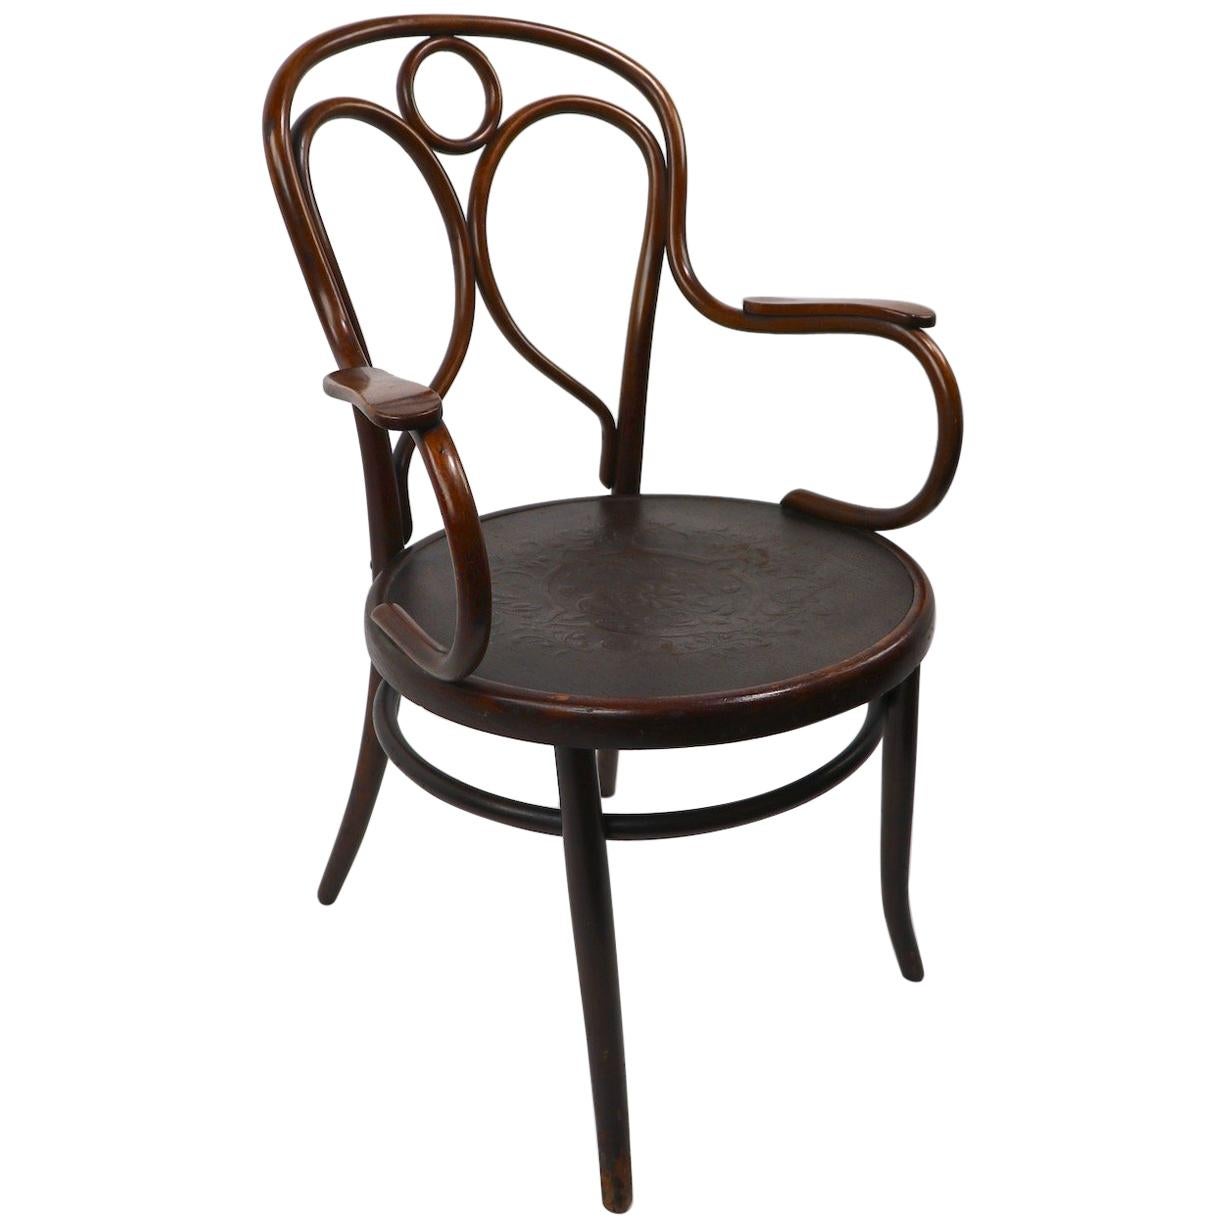 Vienna Secession Bentwood Chair by Fischel 